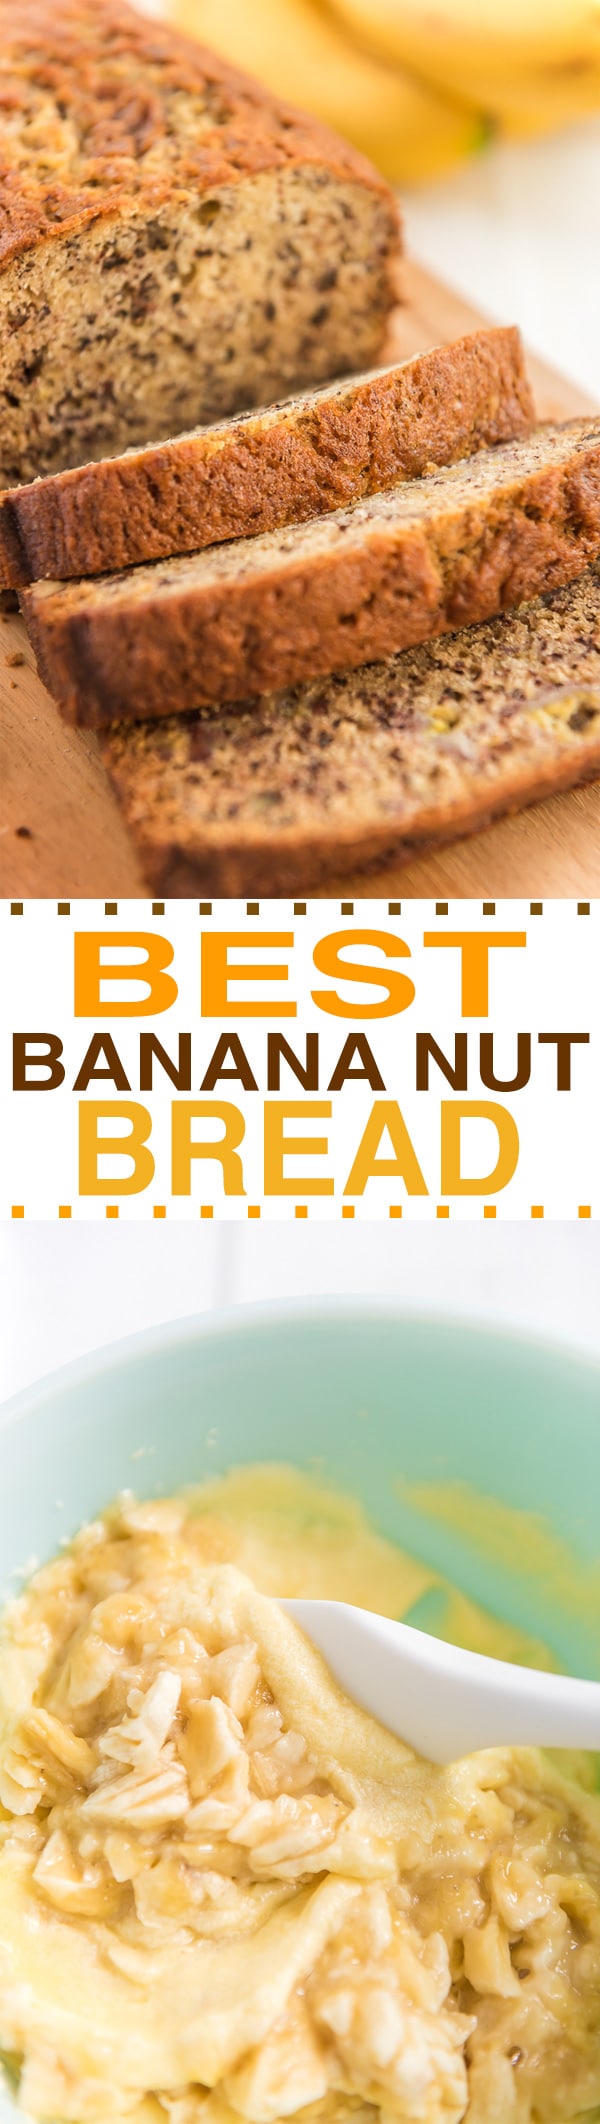 THE BEST BANANA NUT BREAD RECIPE